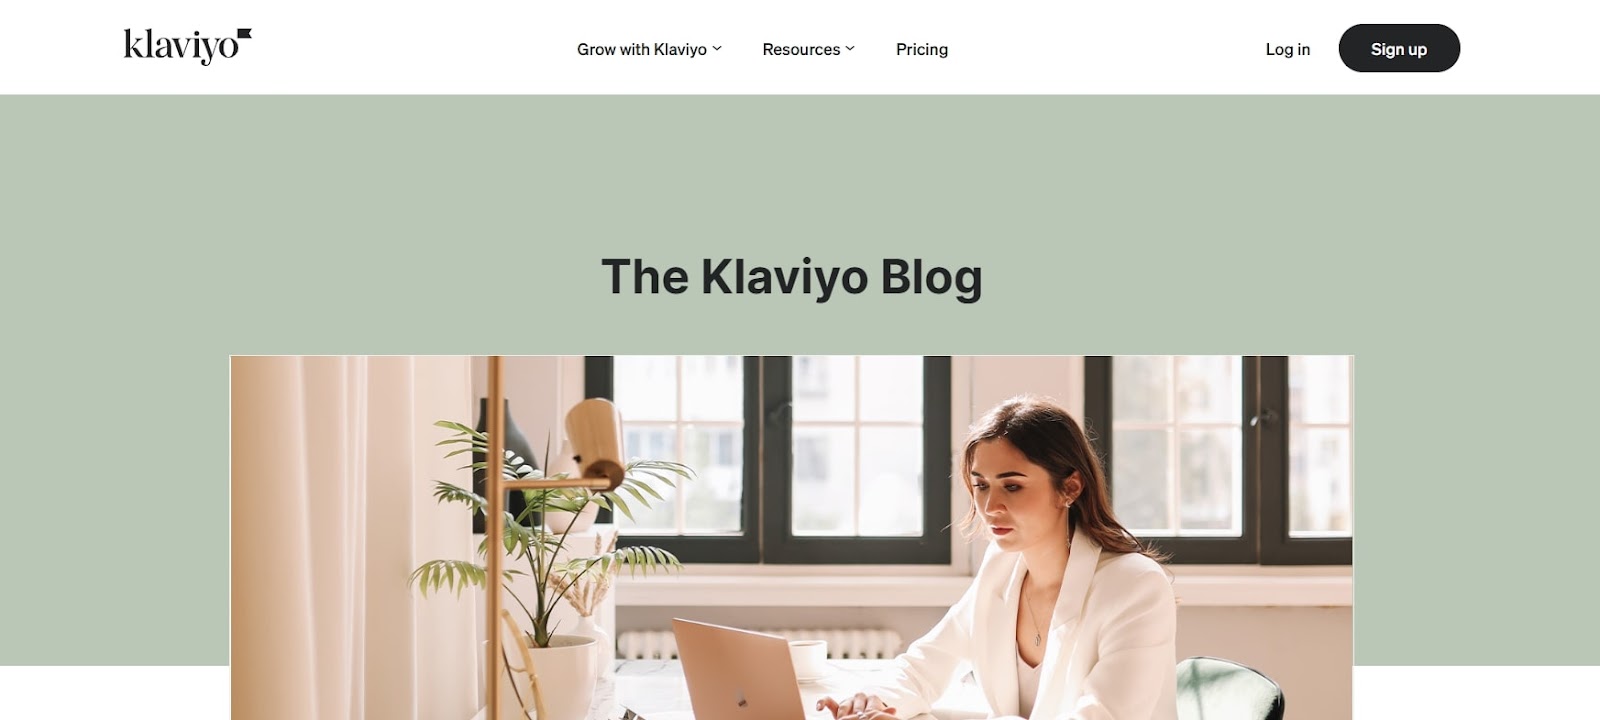 klaviyo blog email marketing